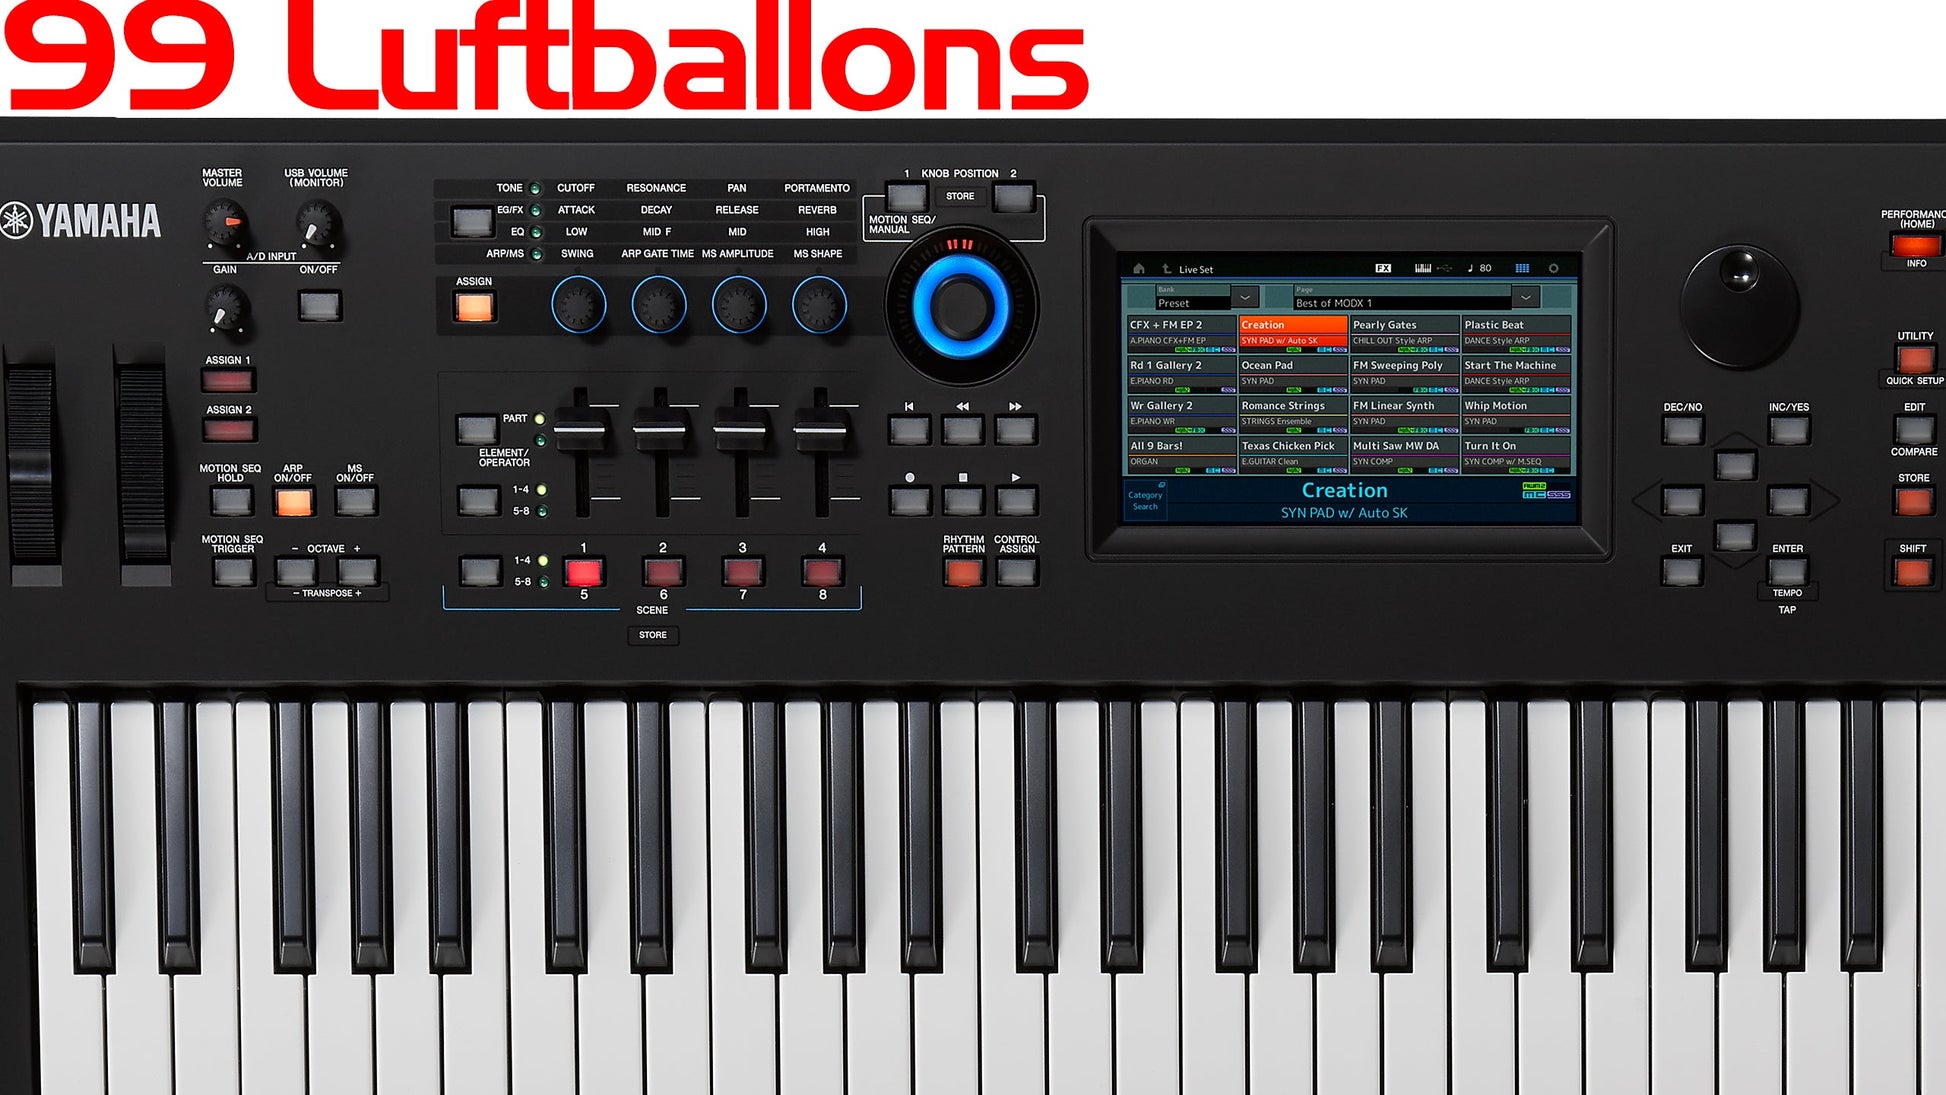 Yamaha Modx Montage Coversound - 99 Luftballons - Thorsten Hillmann Keyboard-Sounds